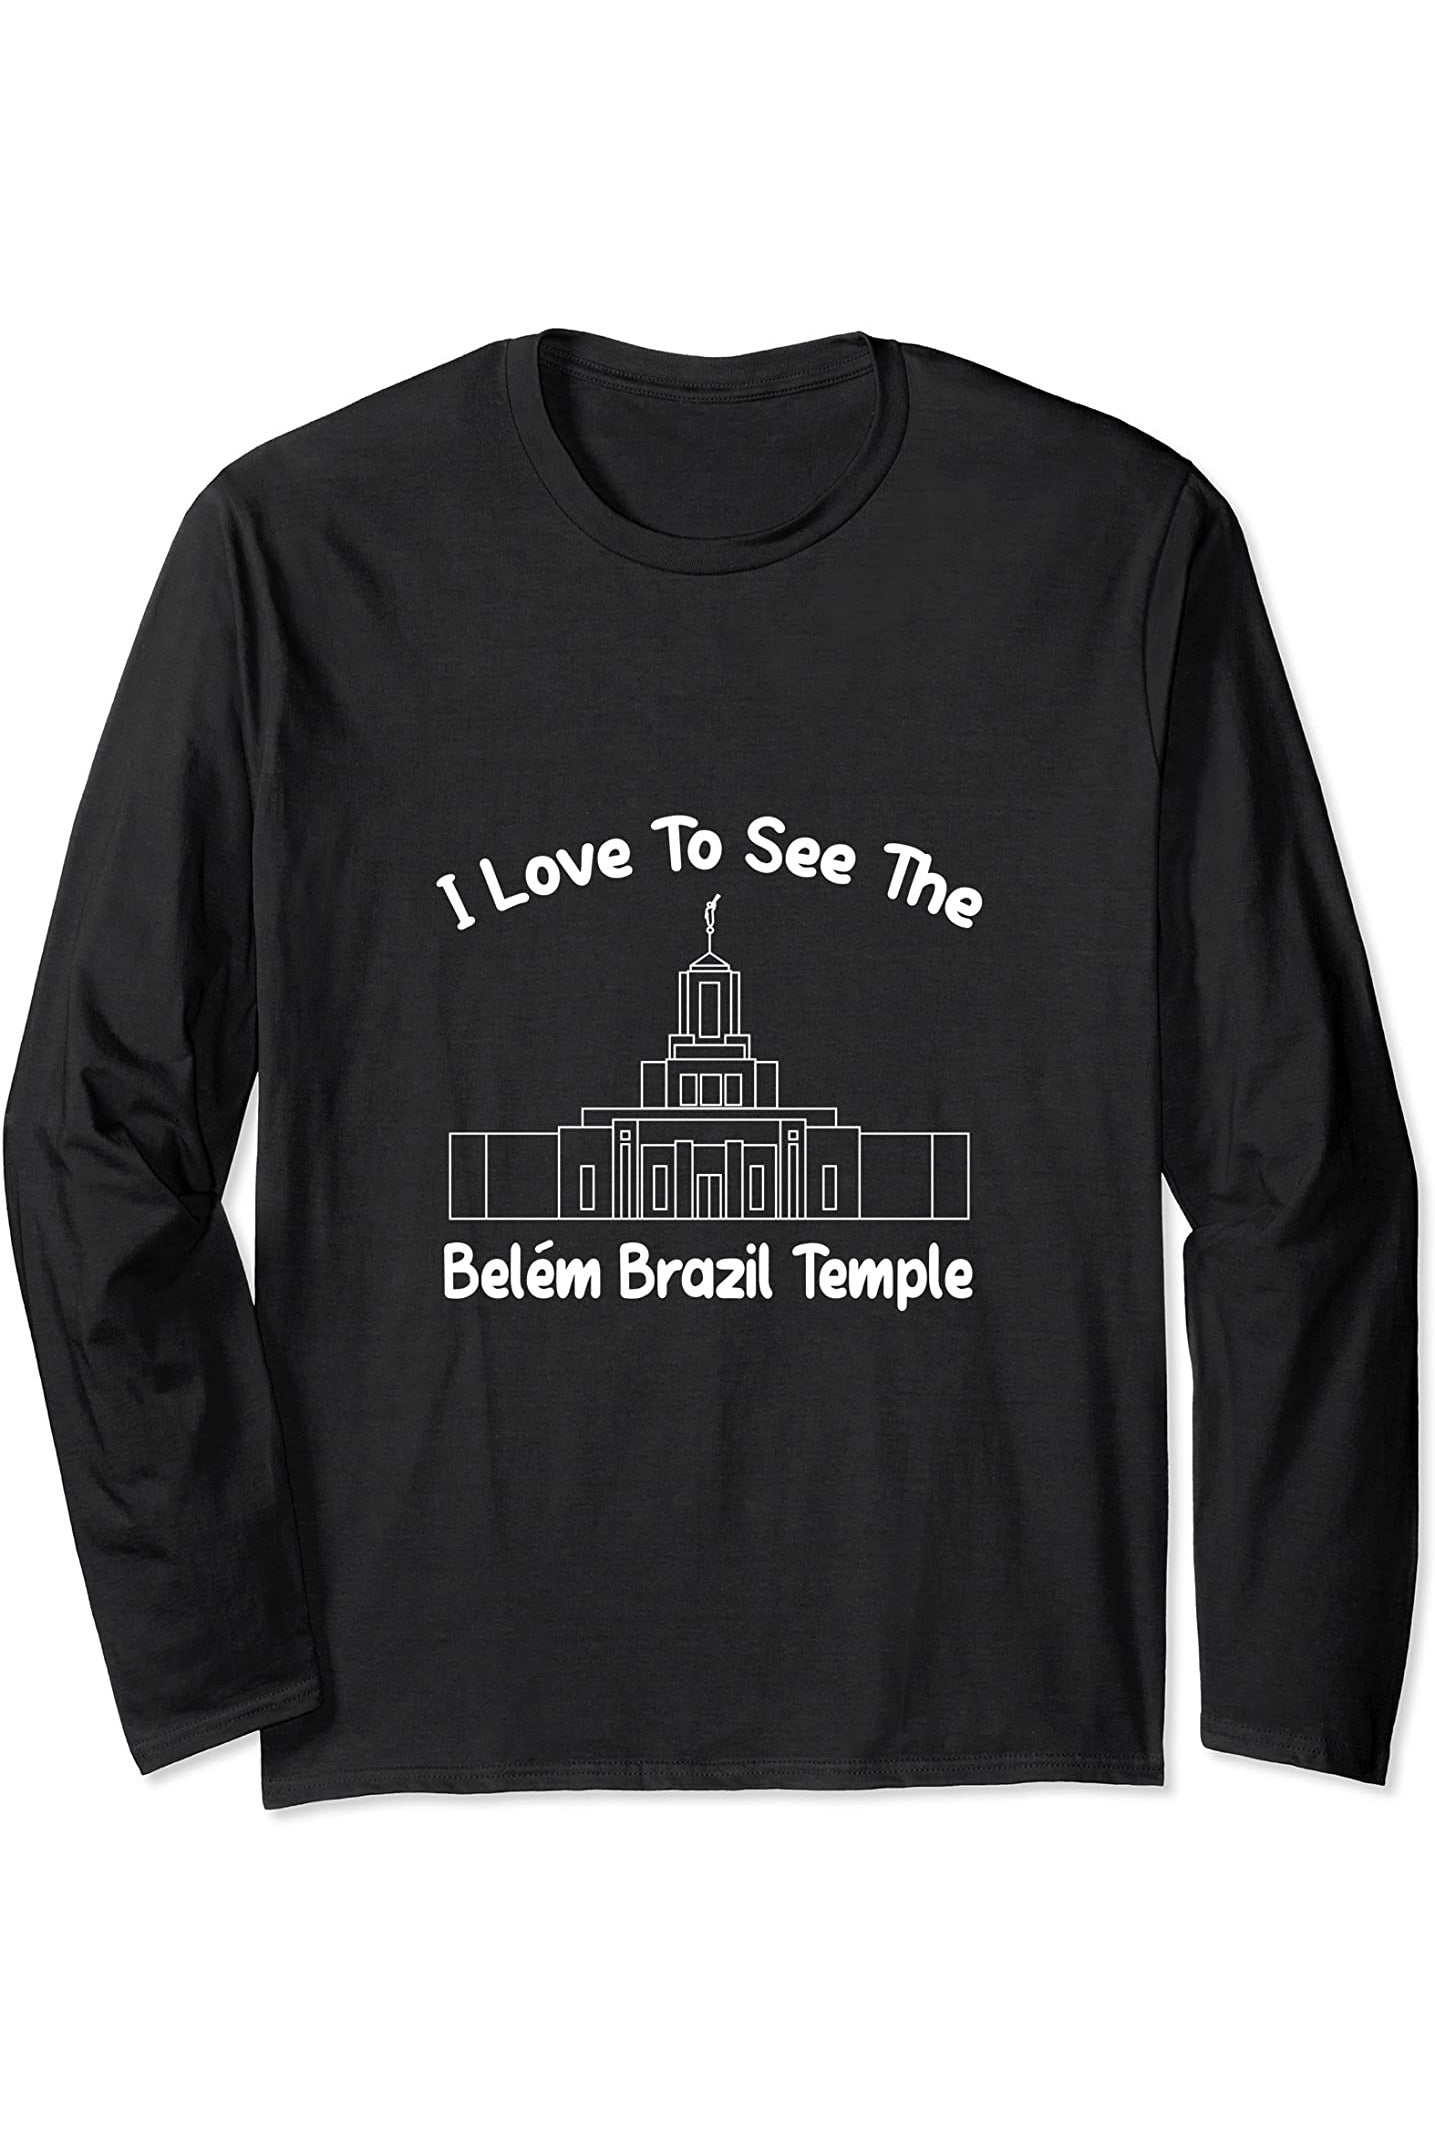 Belem Brazil Temple Long Sleeve T-Shirt - Primary Style (English) US